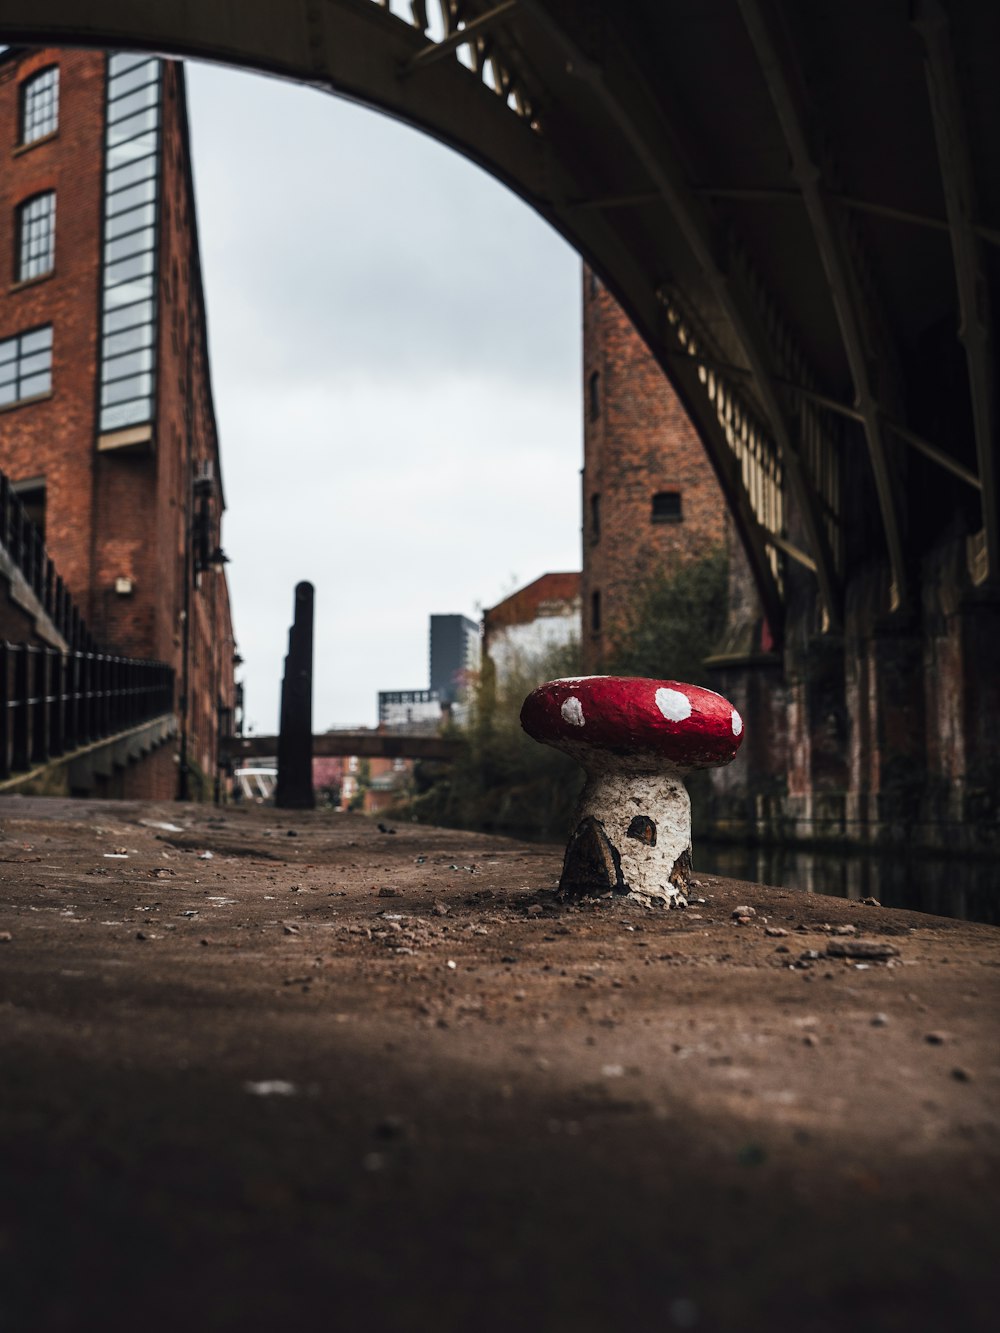 a mushroom sitting on the ground under a bridge